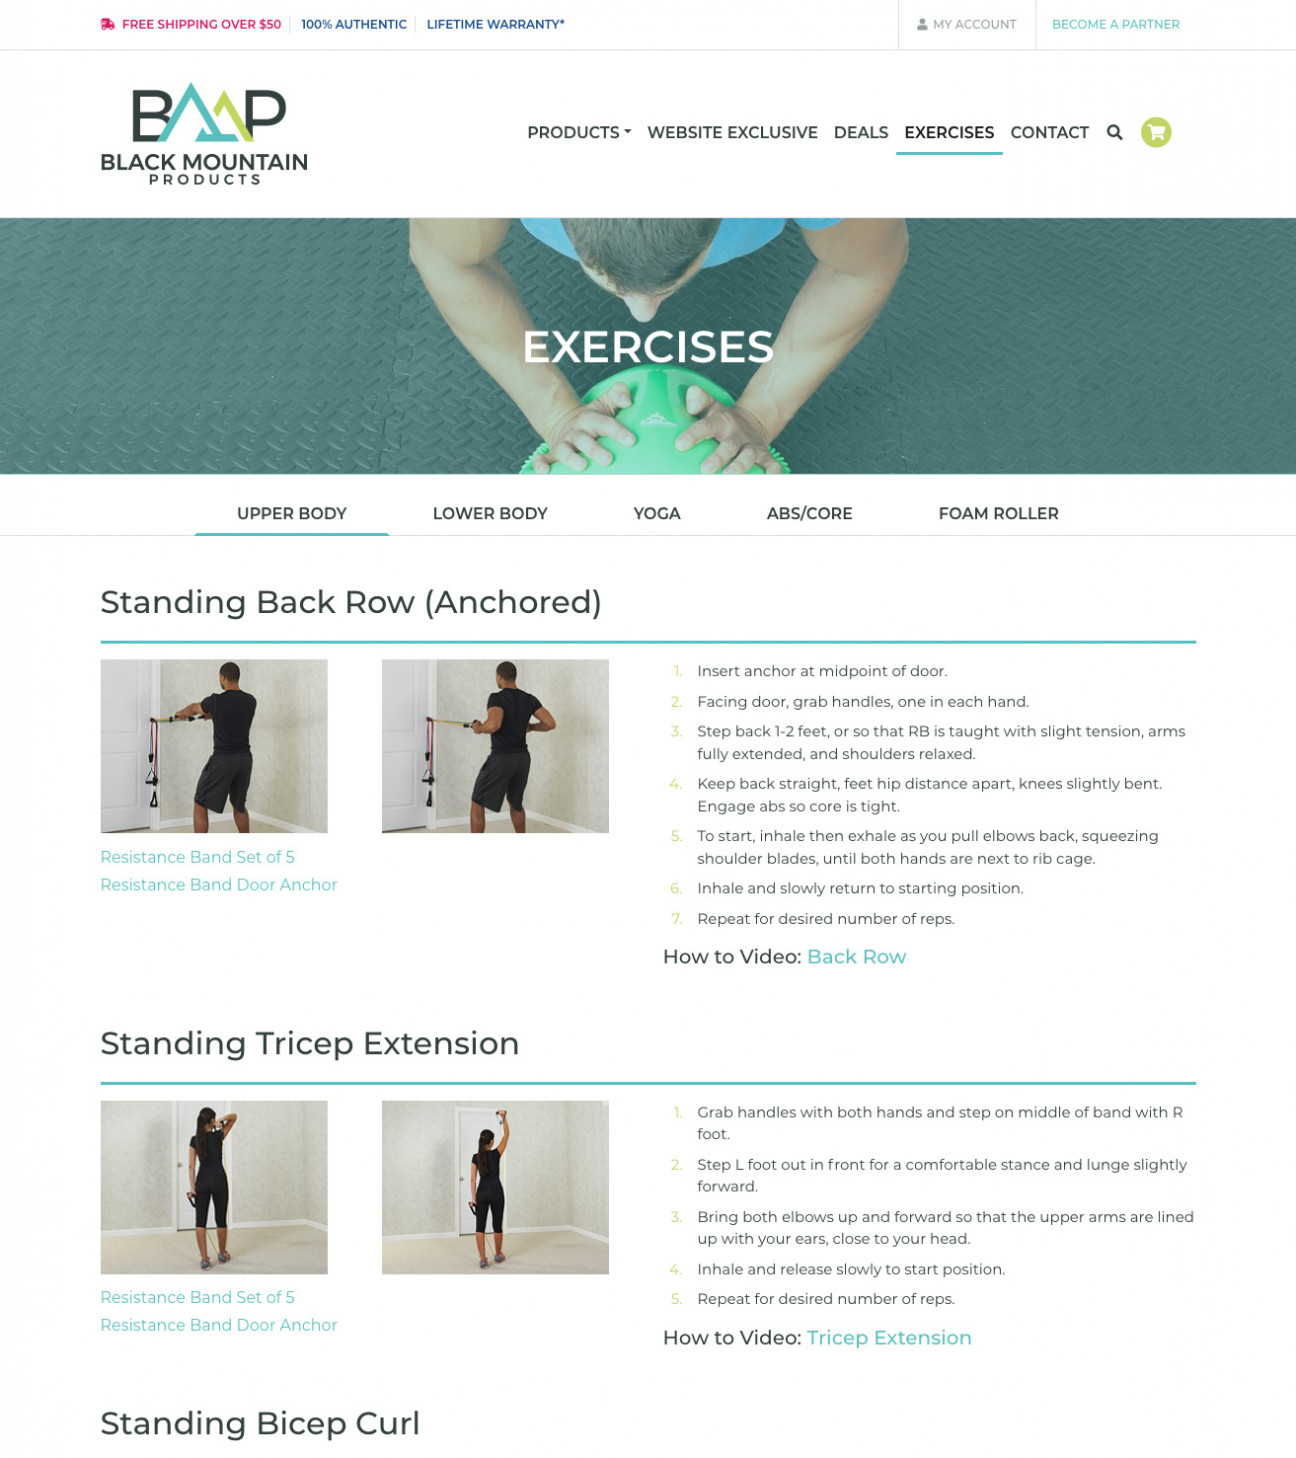 Bmp web design exercises